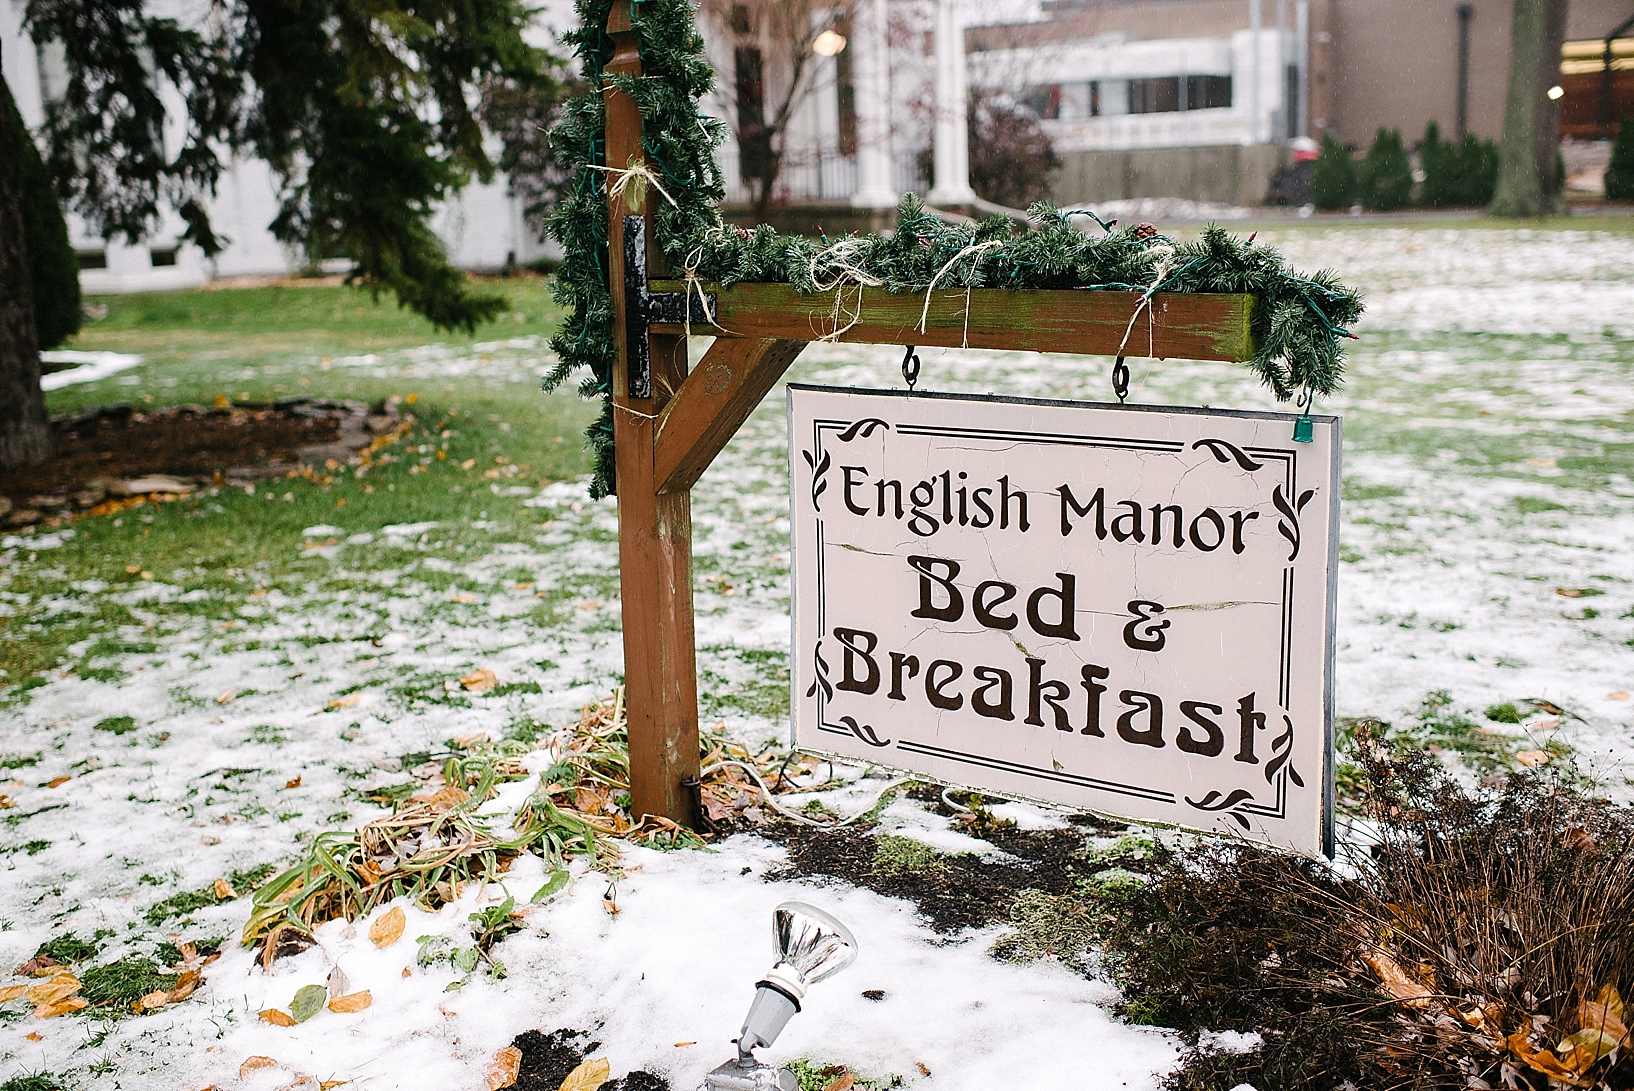 English manor bed & breakfast Dayton OH